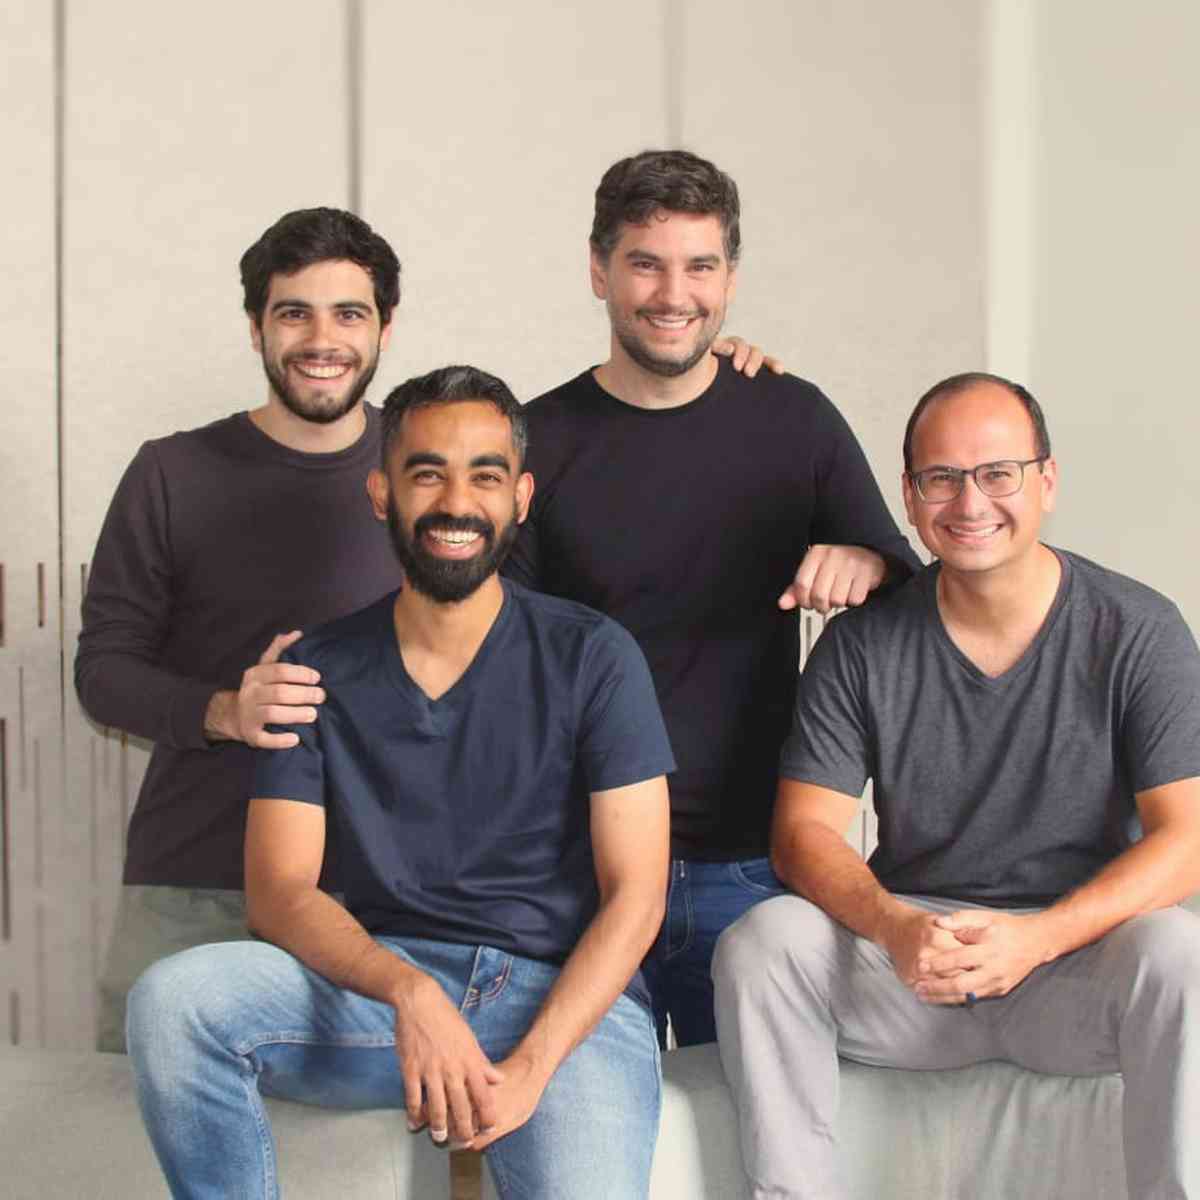 Donos da LOUD abrem startup de blockchain com investimento de R$ 50 milhões  - Millenium